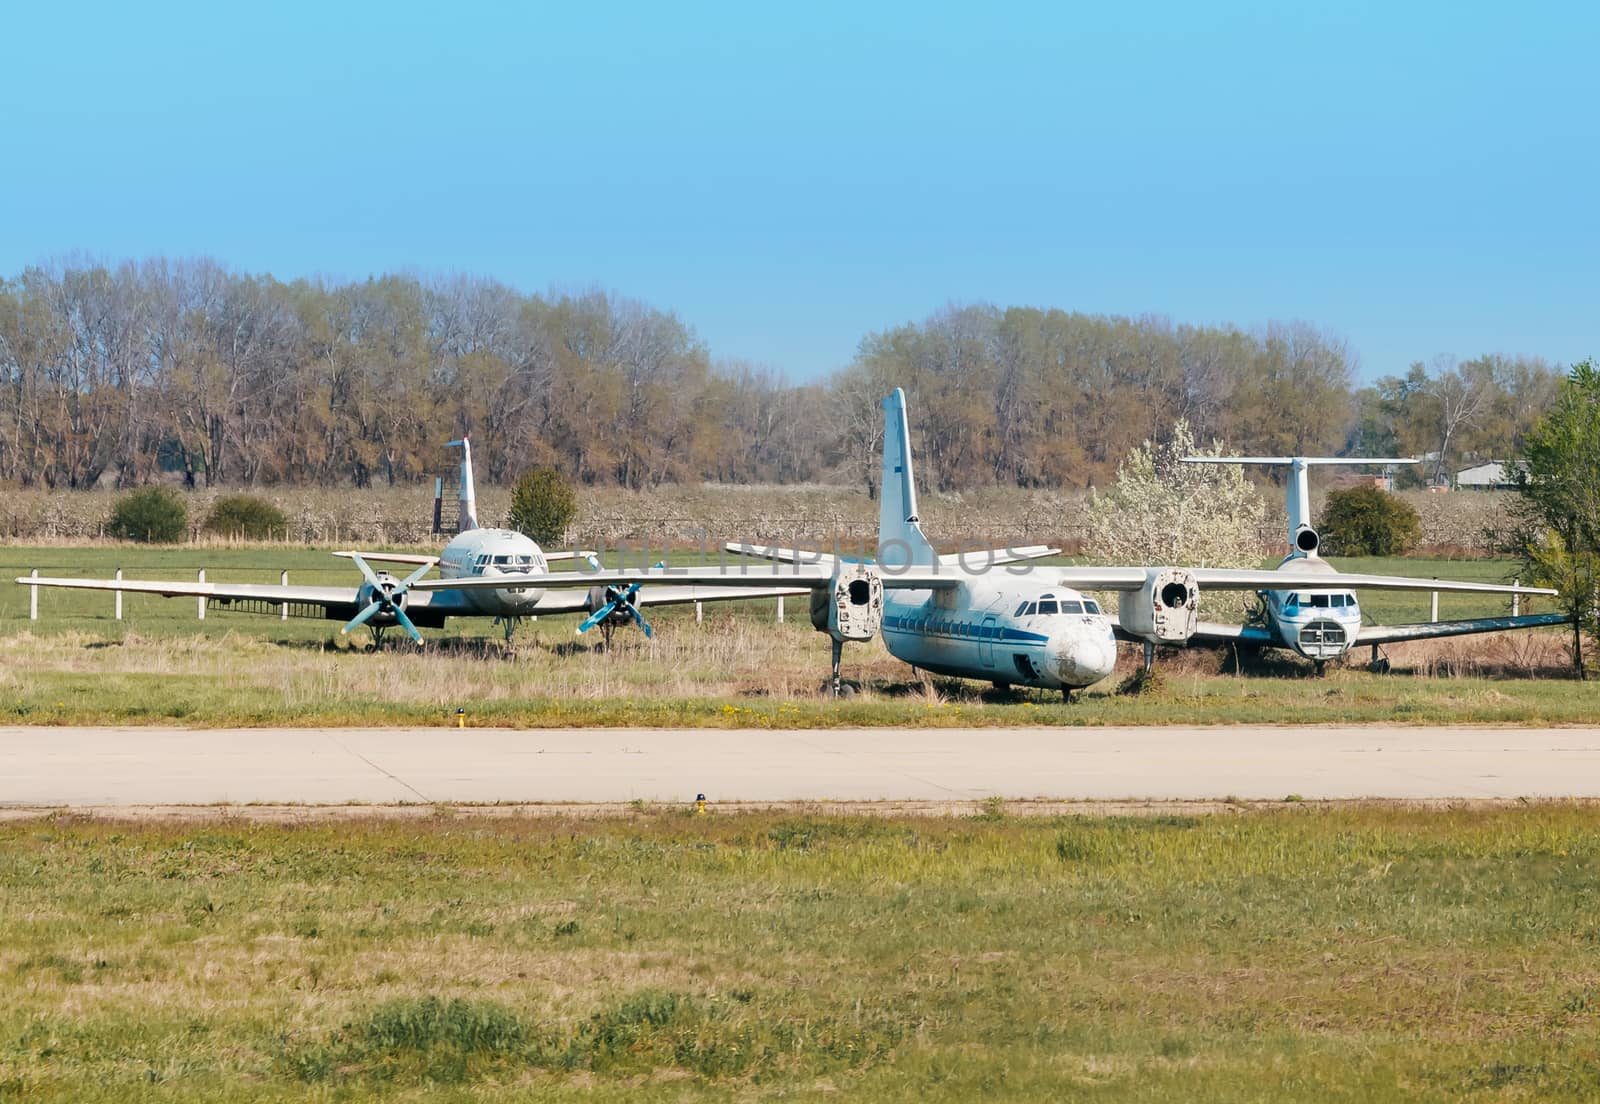 Cemetery aircraft near the runway